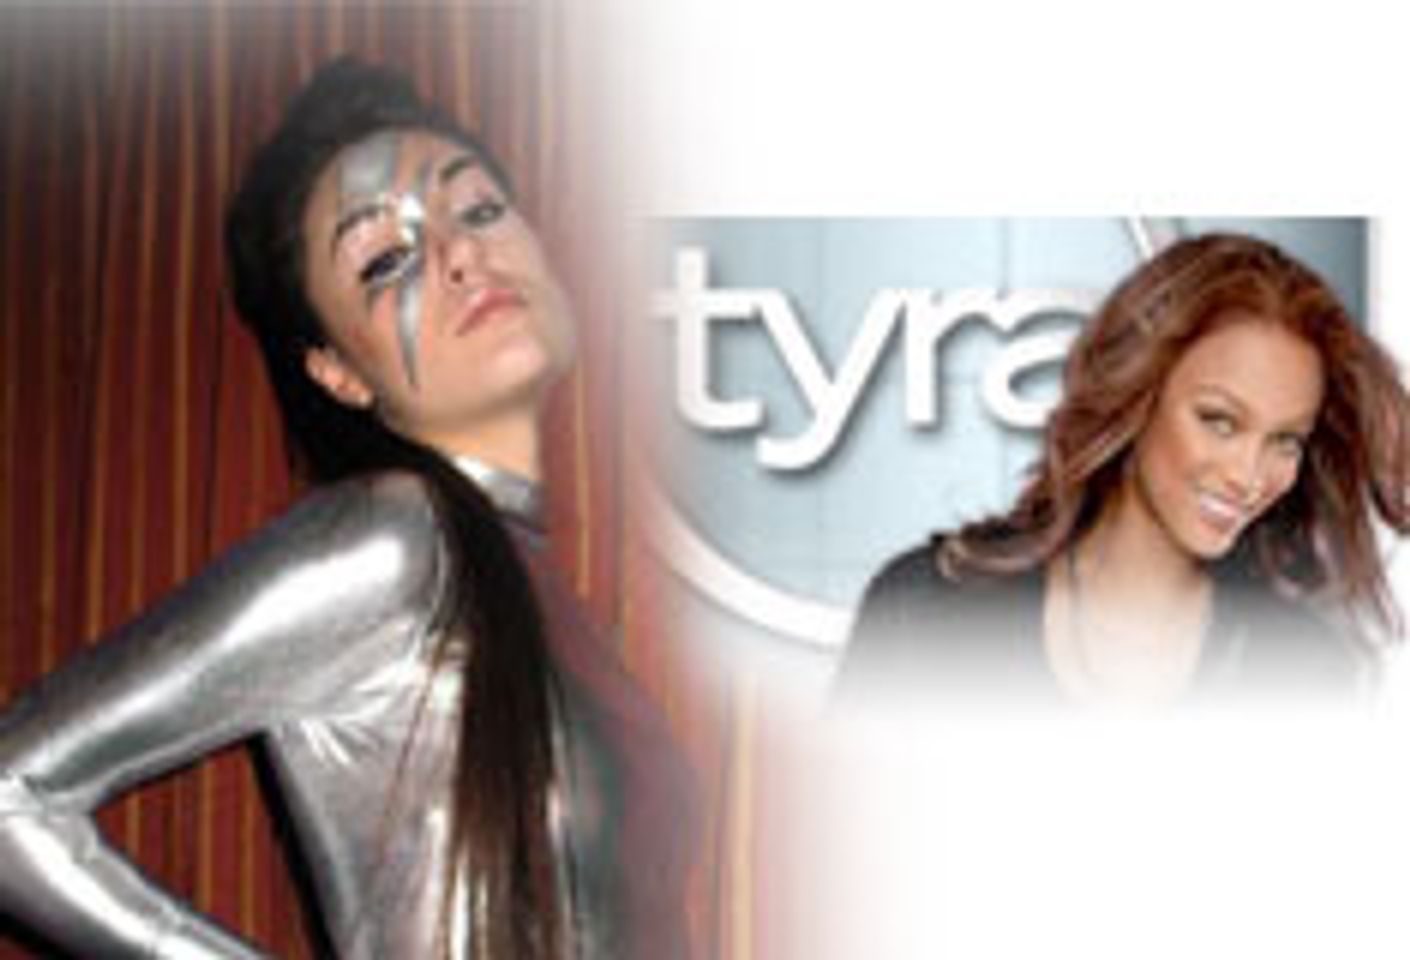 Commentary: Sasha Grey Goes on 'The Tyra Banks Show'